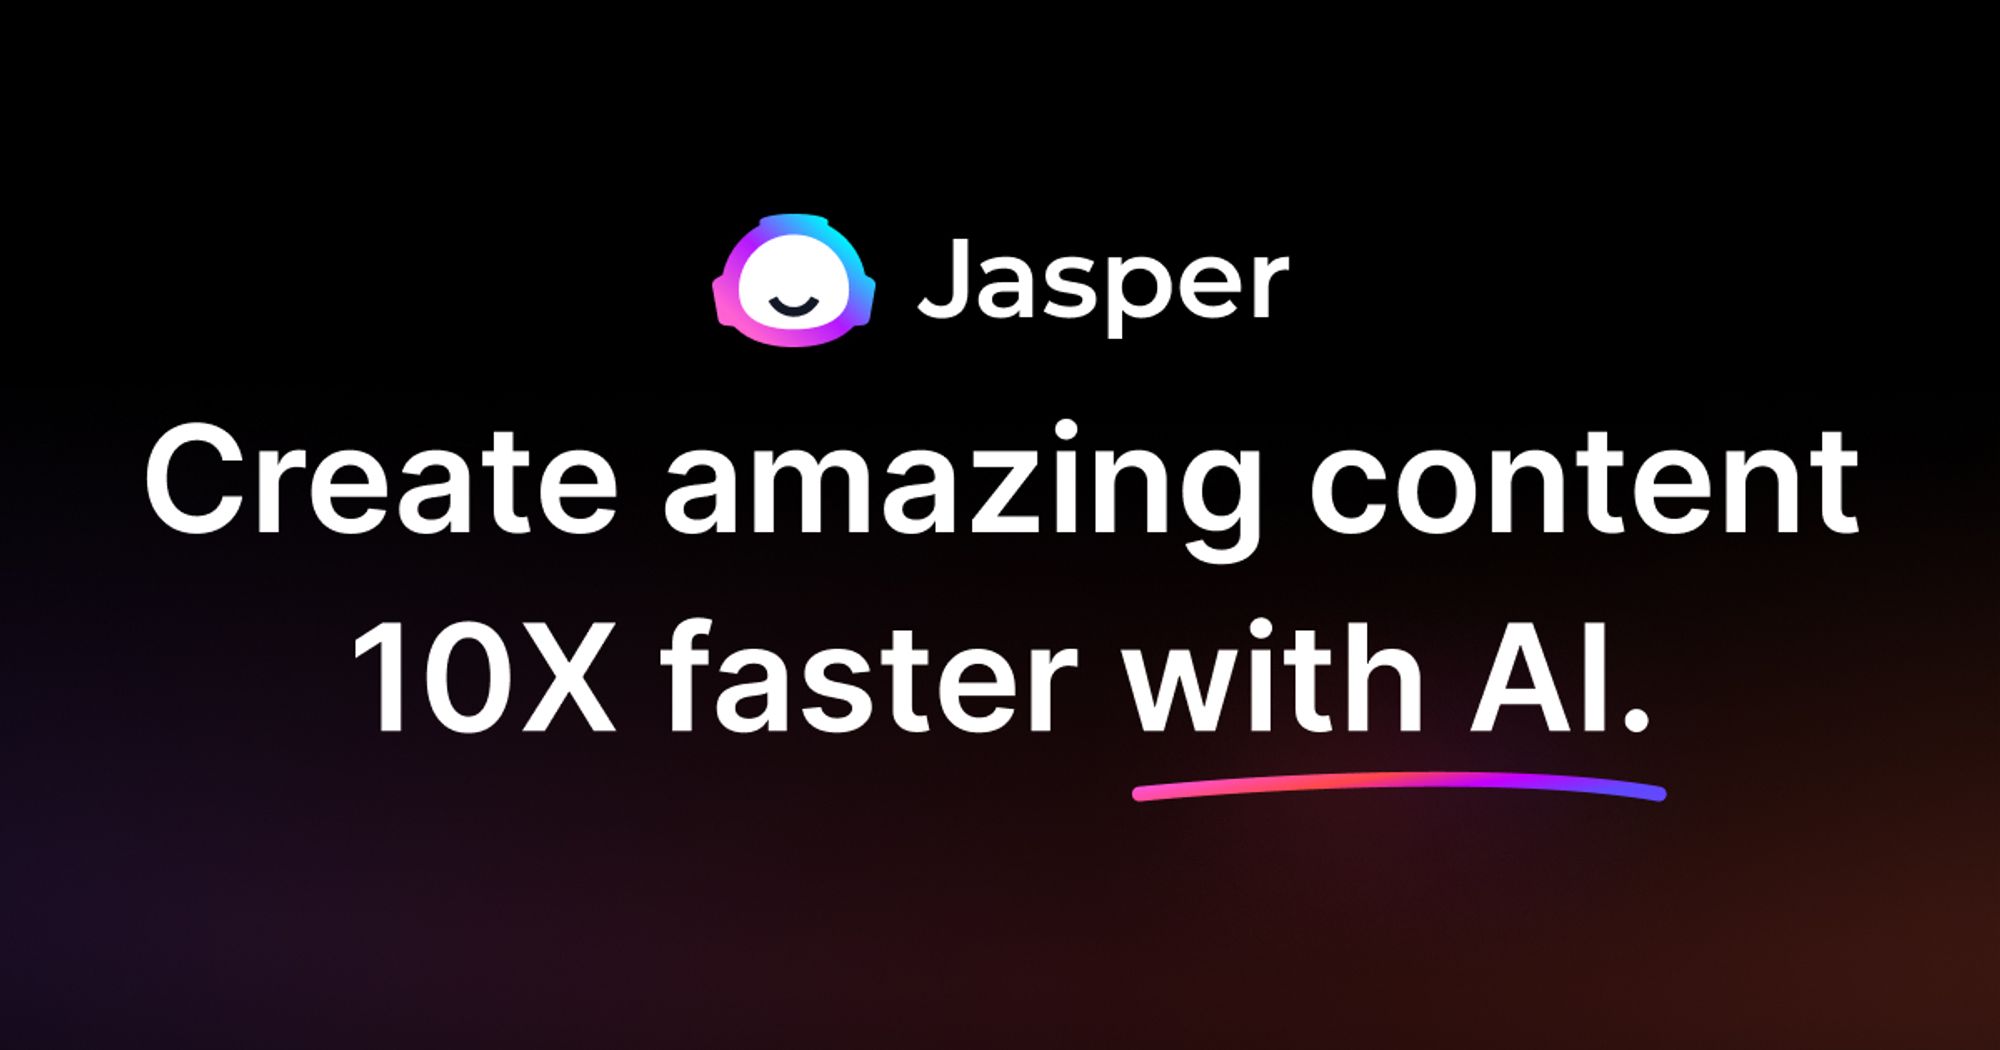 Jasper - The #1 AI Content Platform For Business